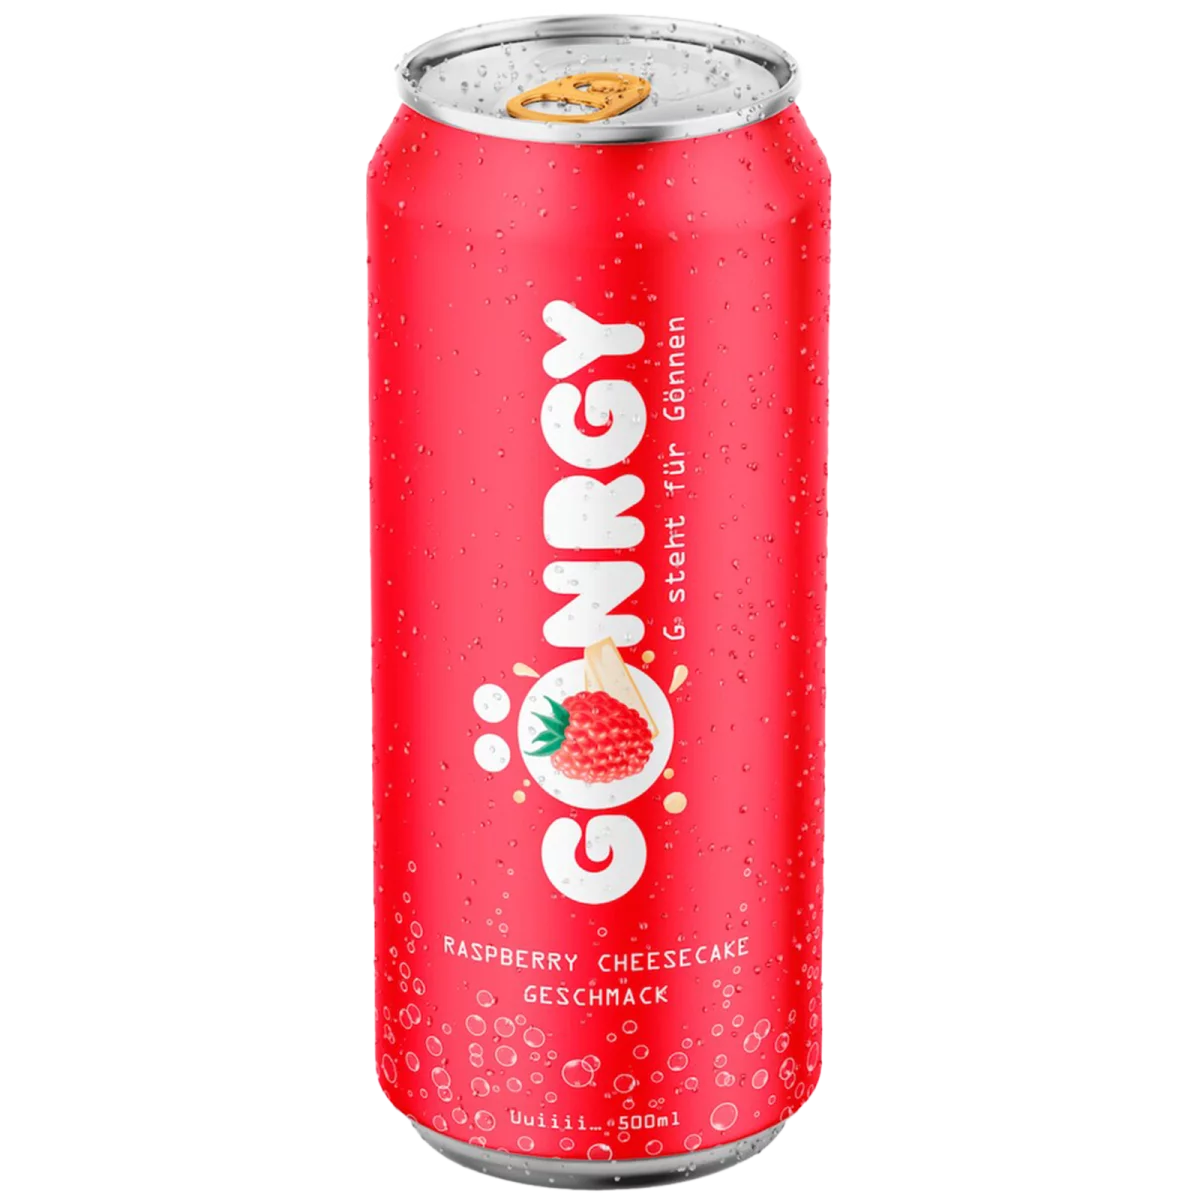 Gönrgy - Raspberry Cheesecake - Energy-Drink